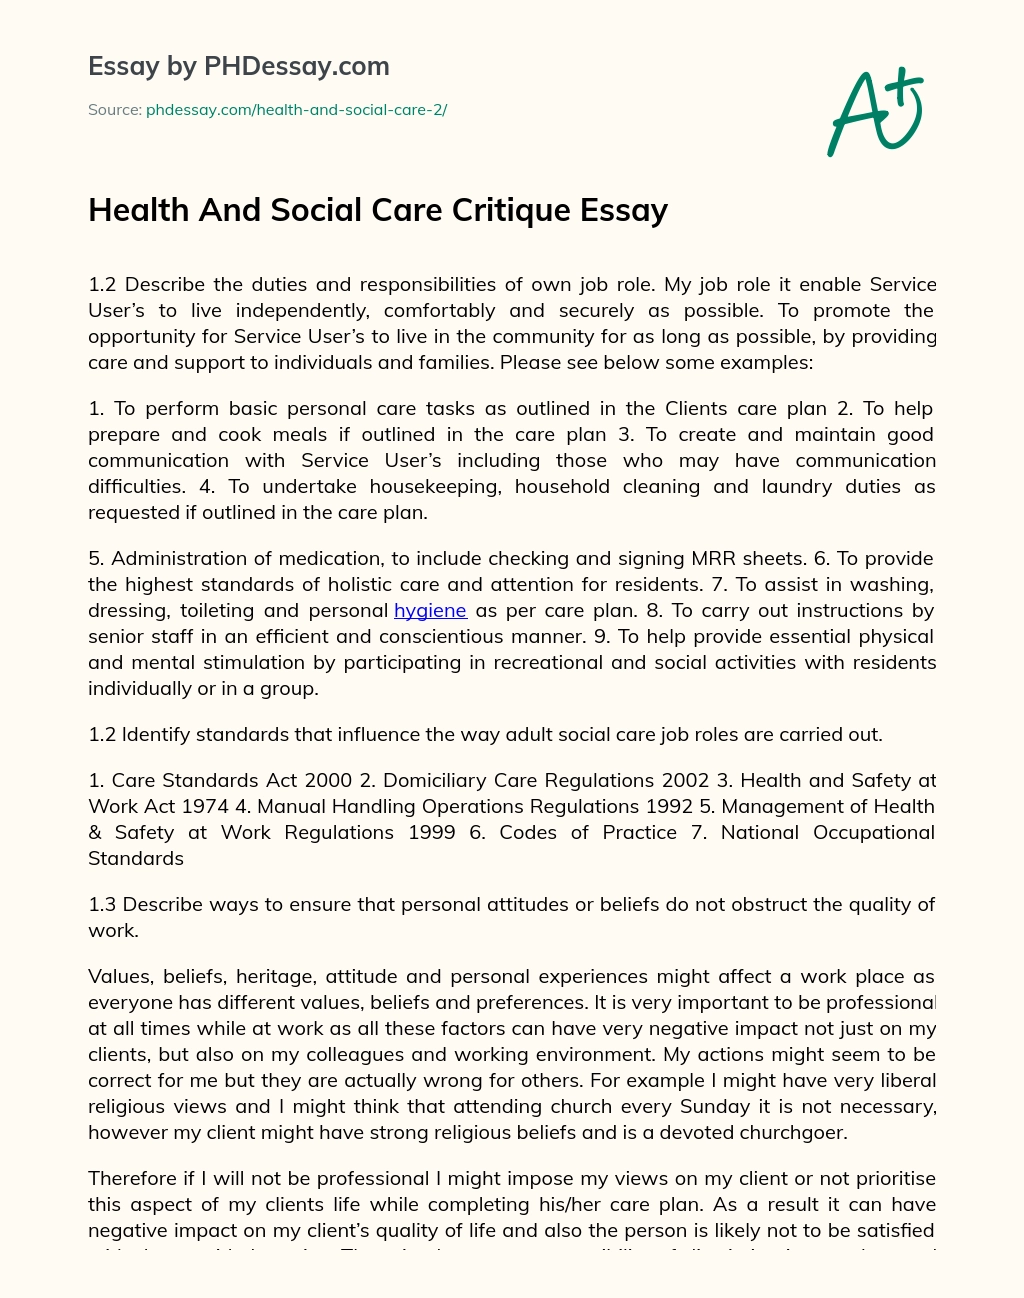 Health And Social Care Critique Essay essay